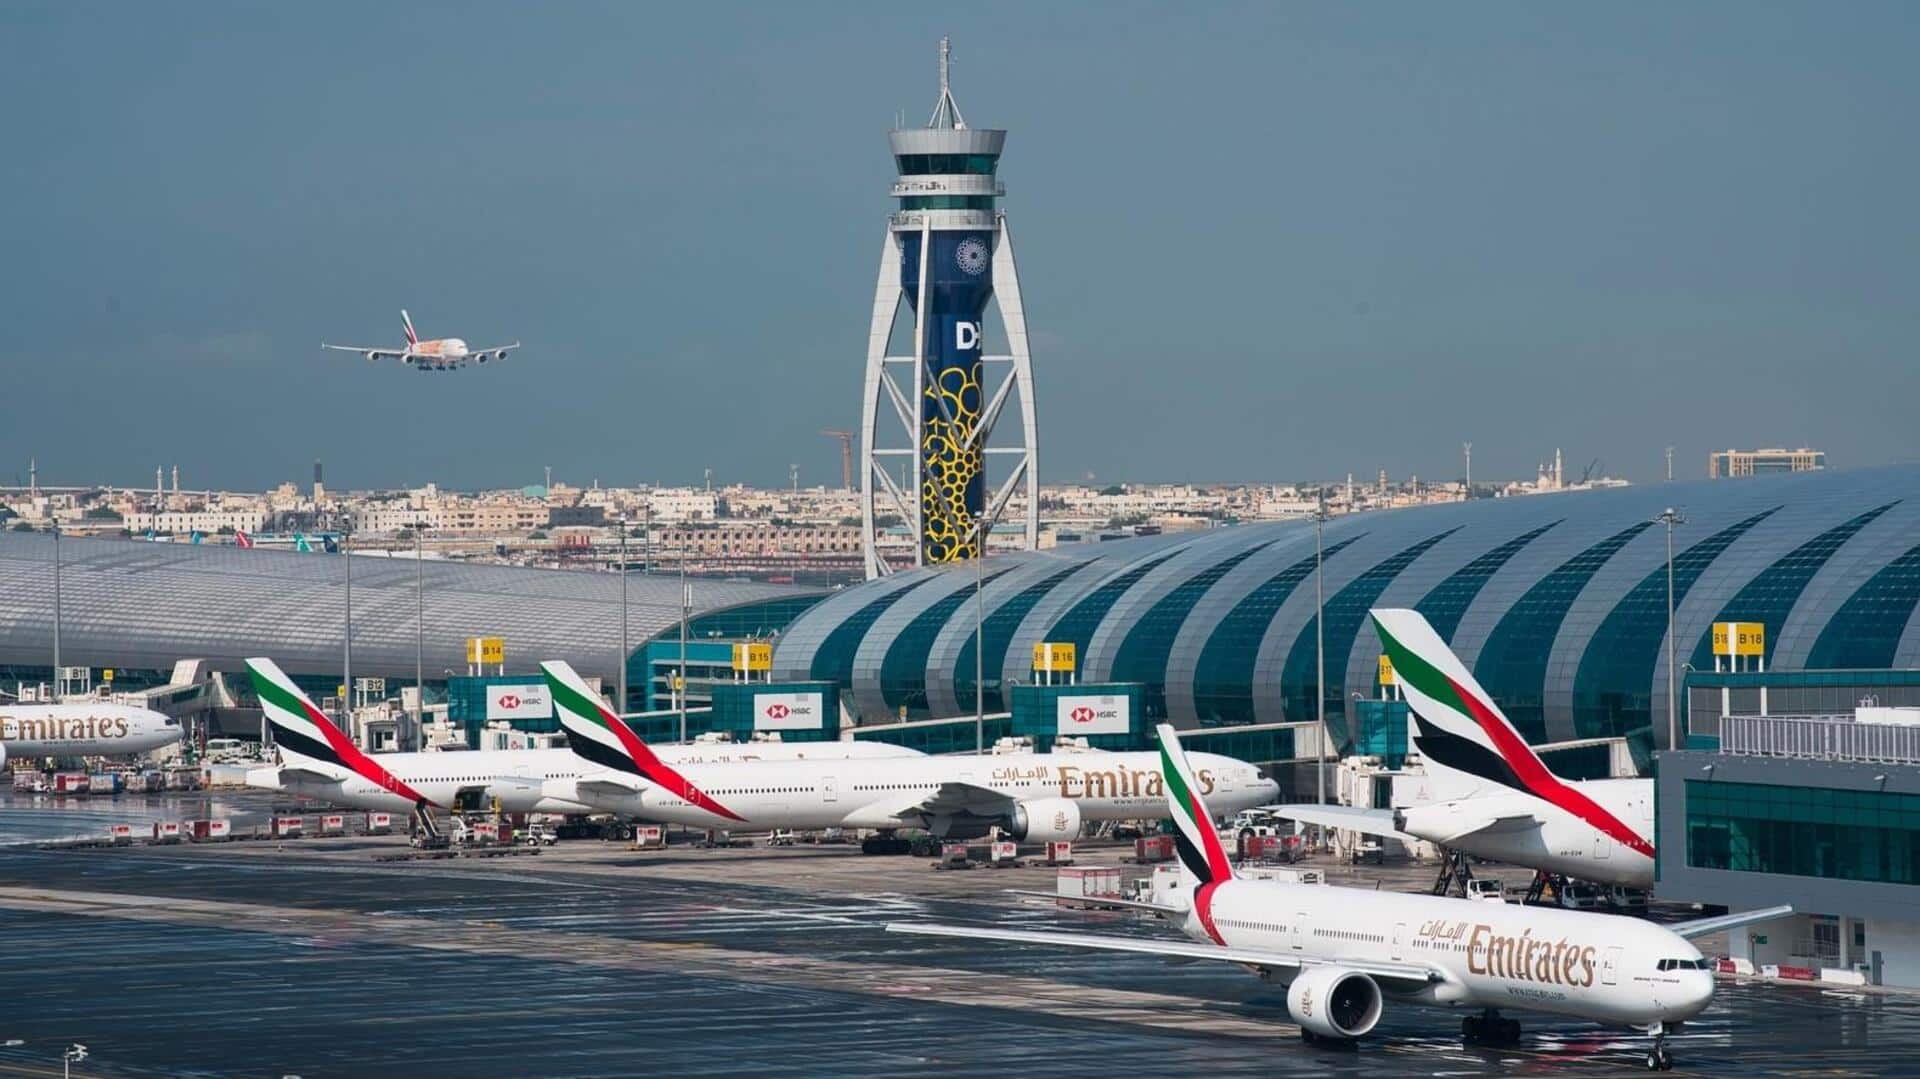 Dubai to build new mega airport as passenger traffic recovers